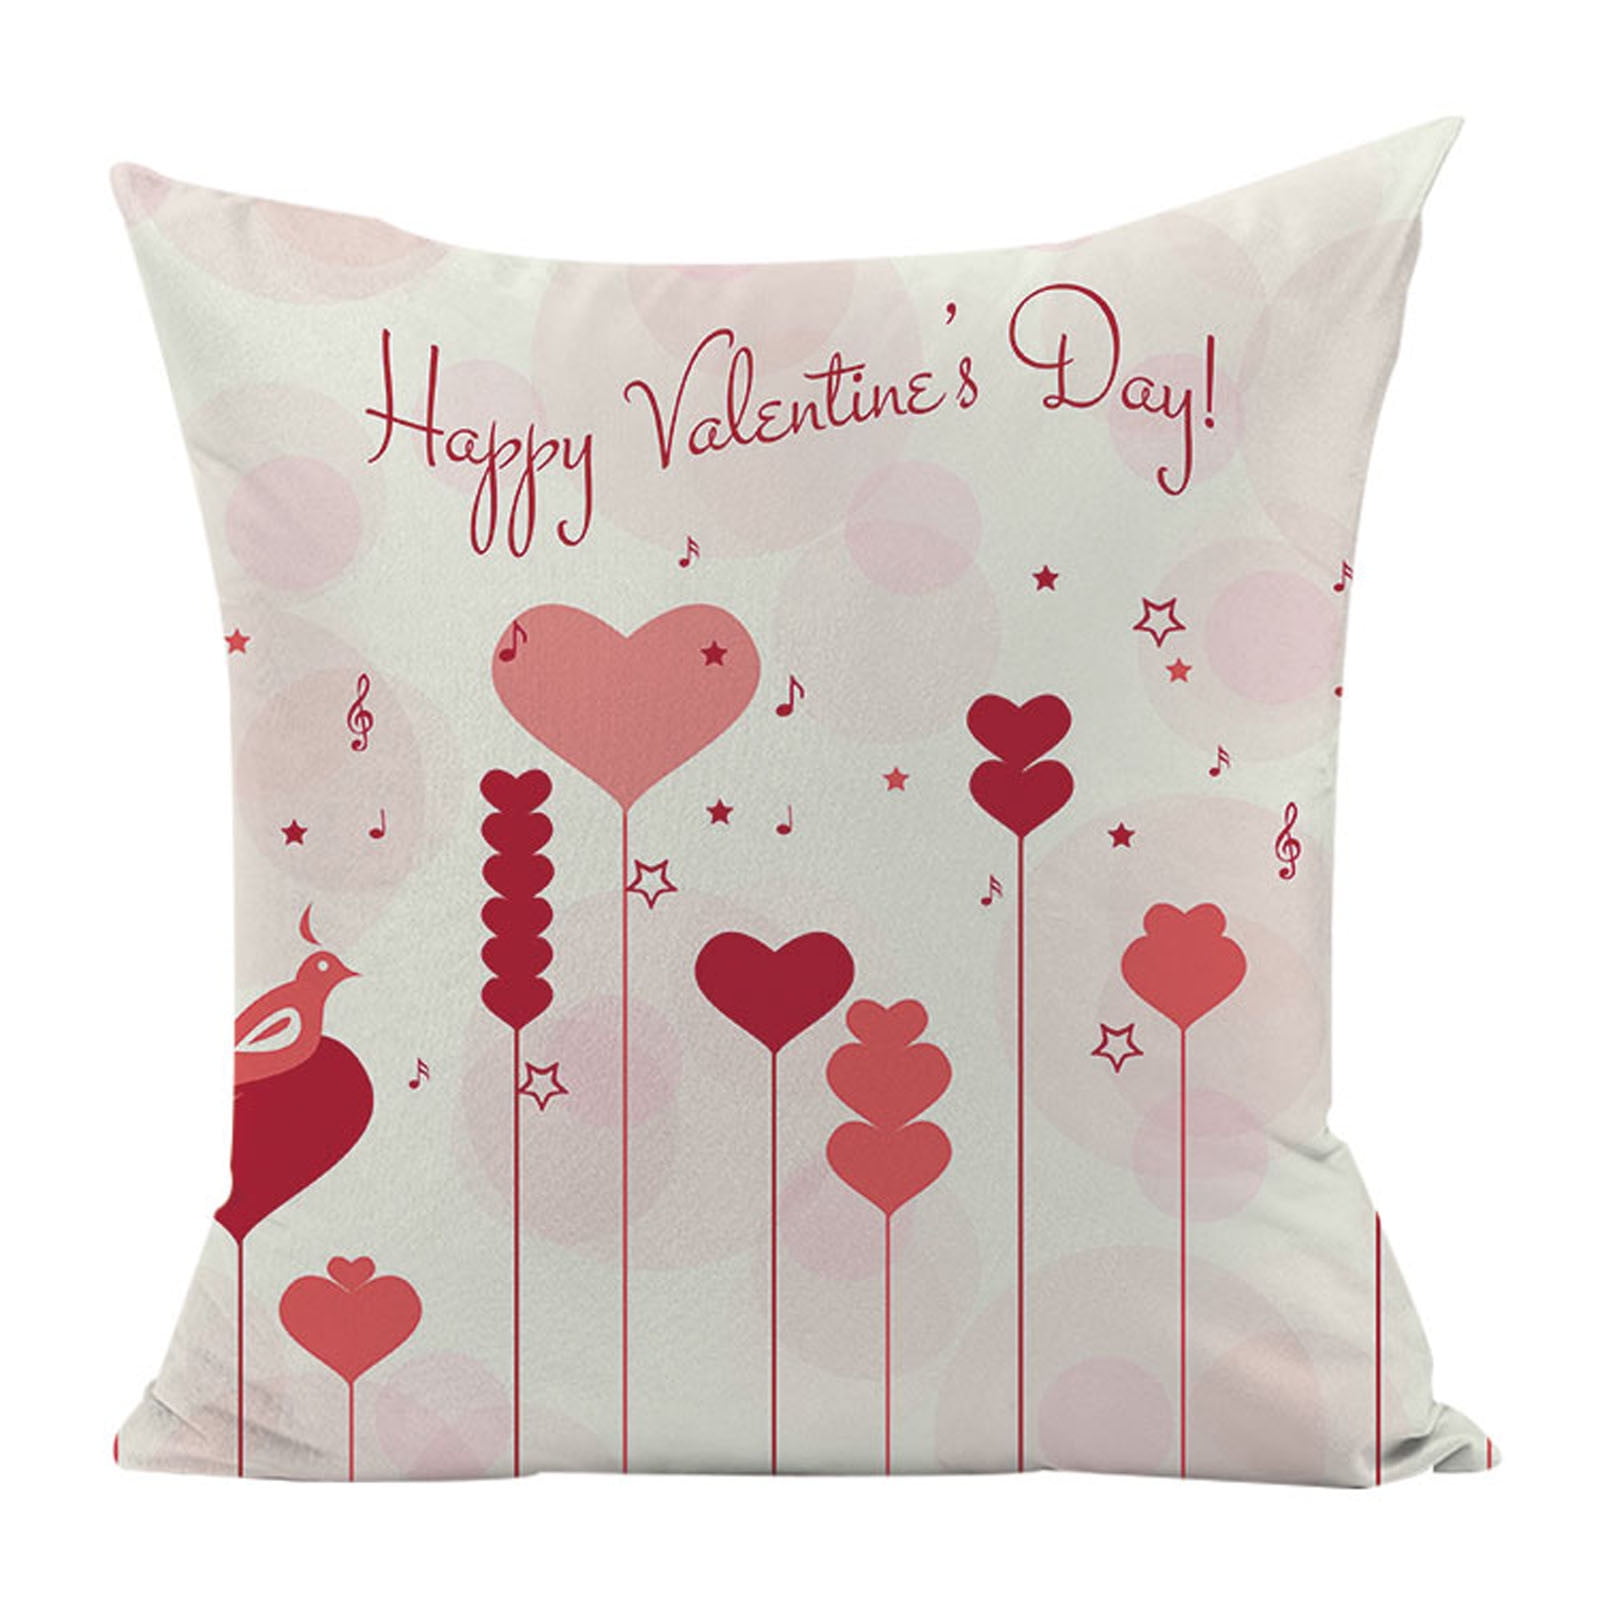 18" valentine's day Heart Cotton Linen Pillow Case Cushion Cover Home Decor 